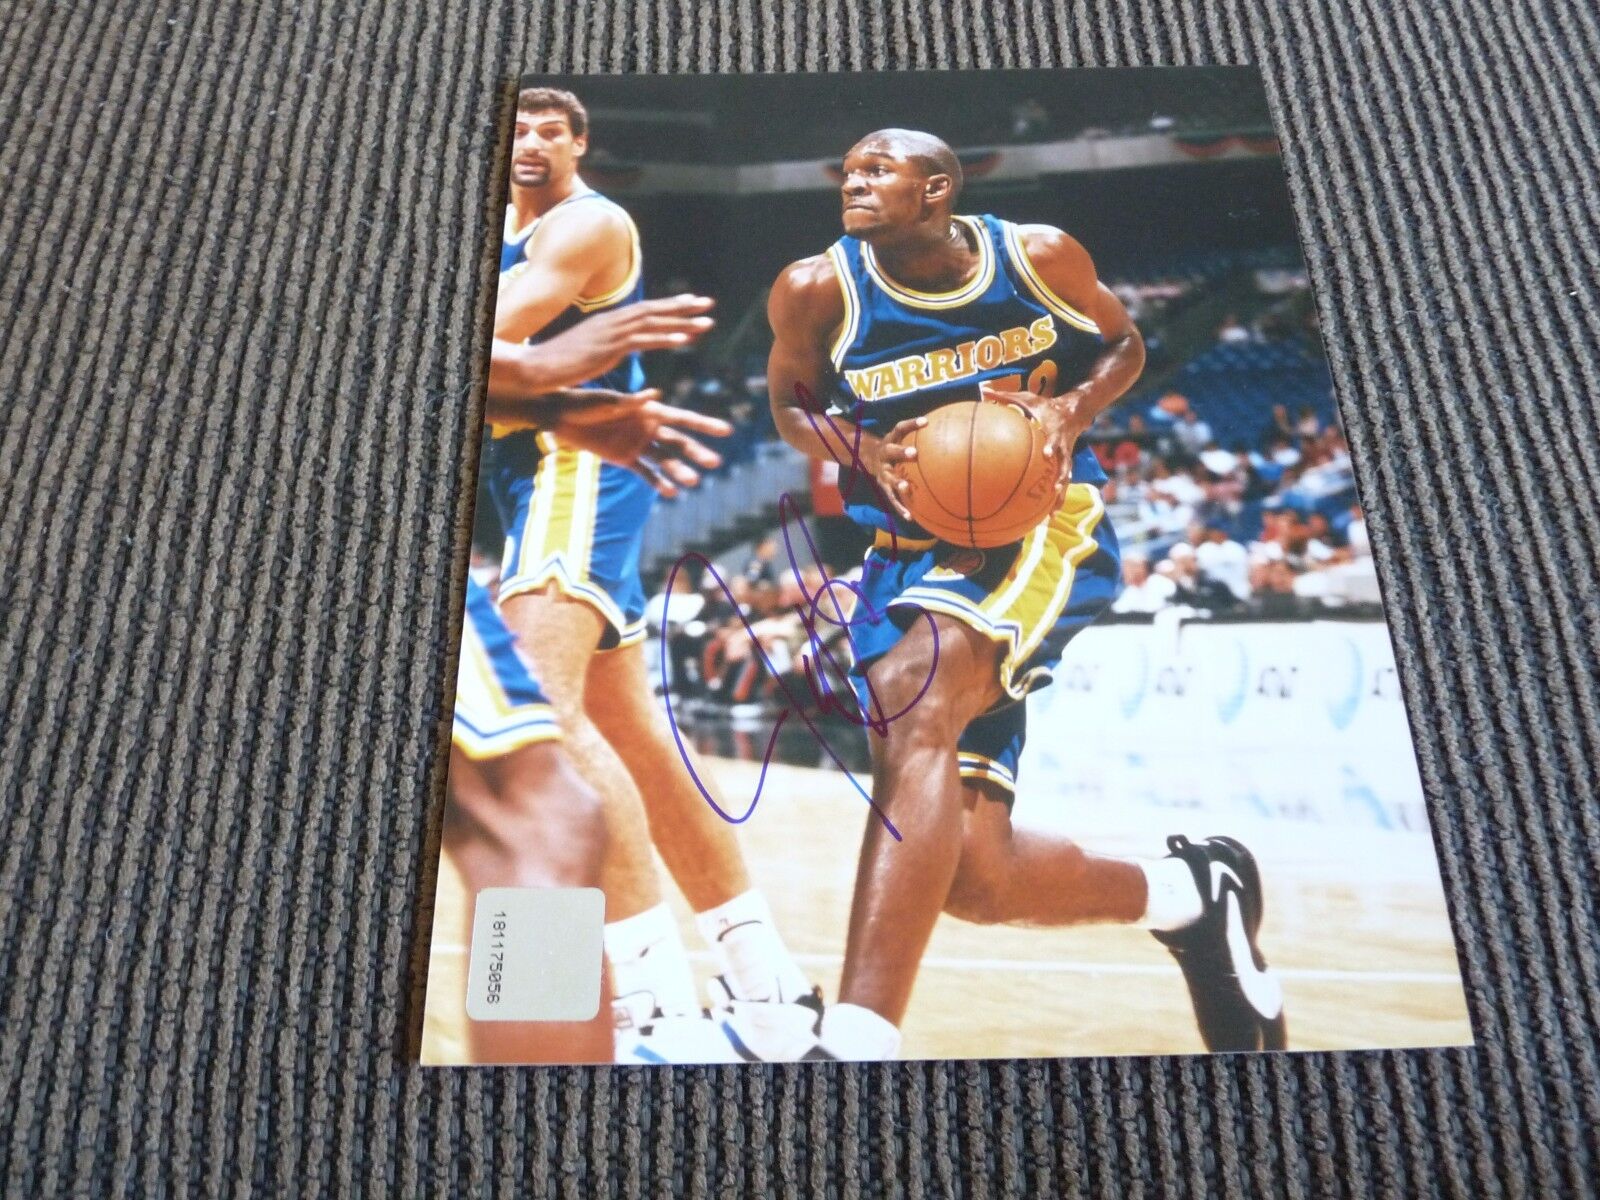 Joe Smith Warriors Basketball Signed Autogrphed 8x10 Photo Poster painting PSA Guaranteed